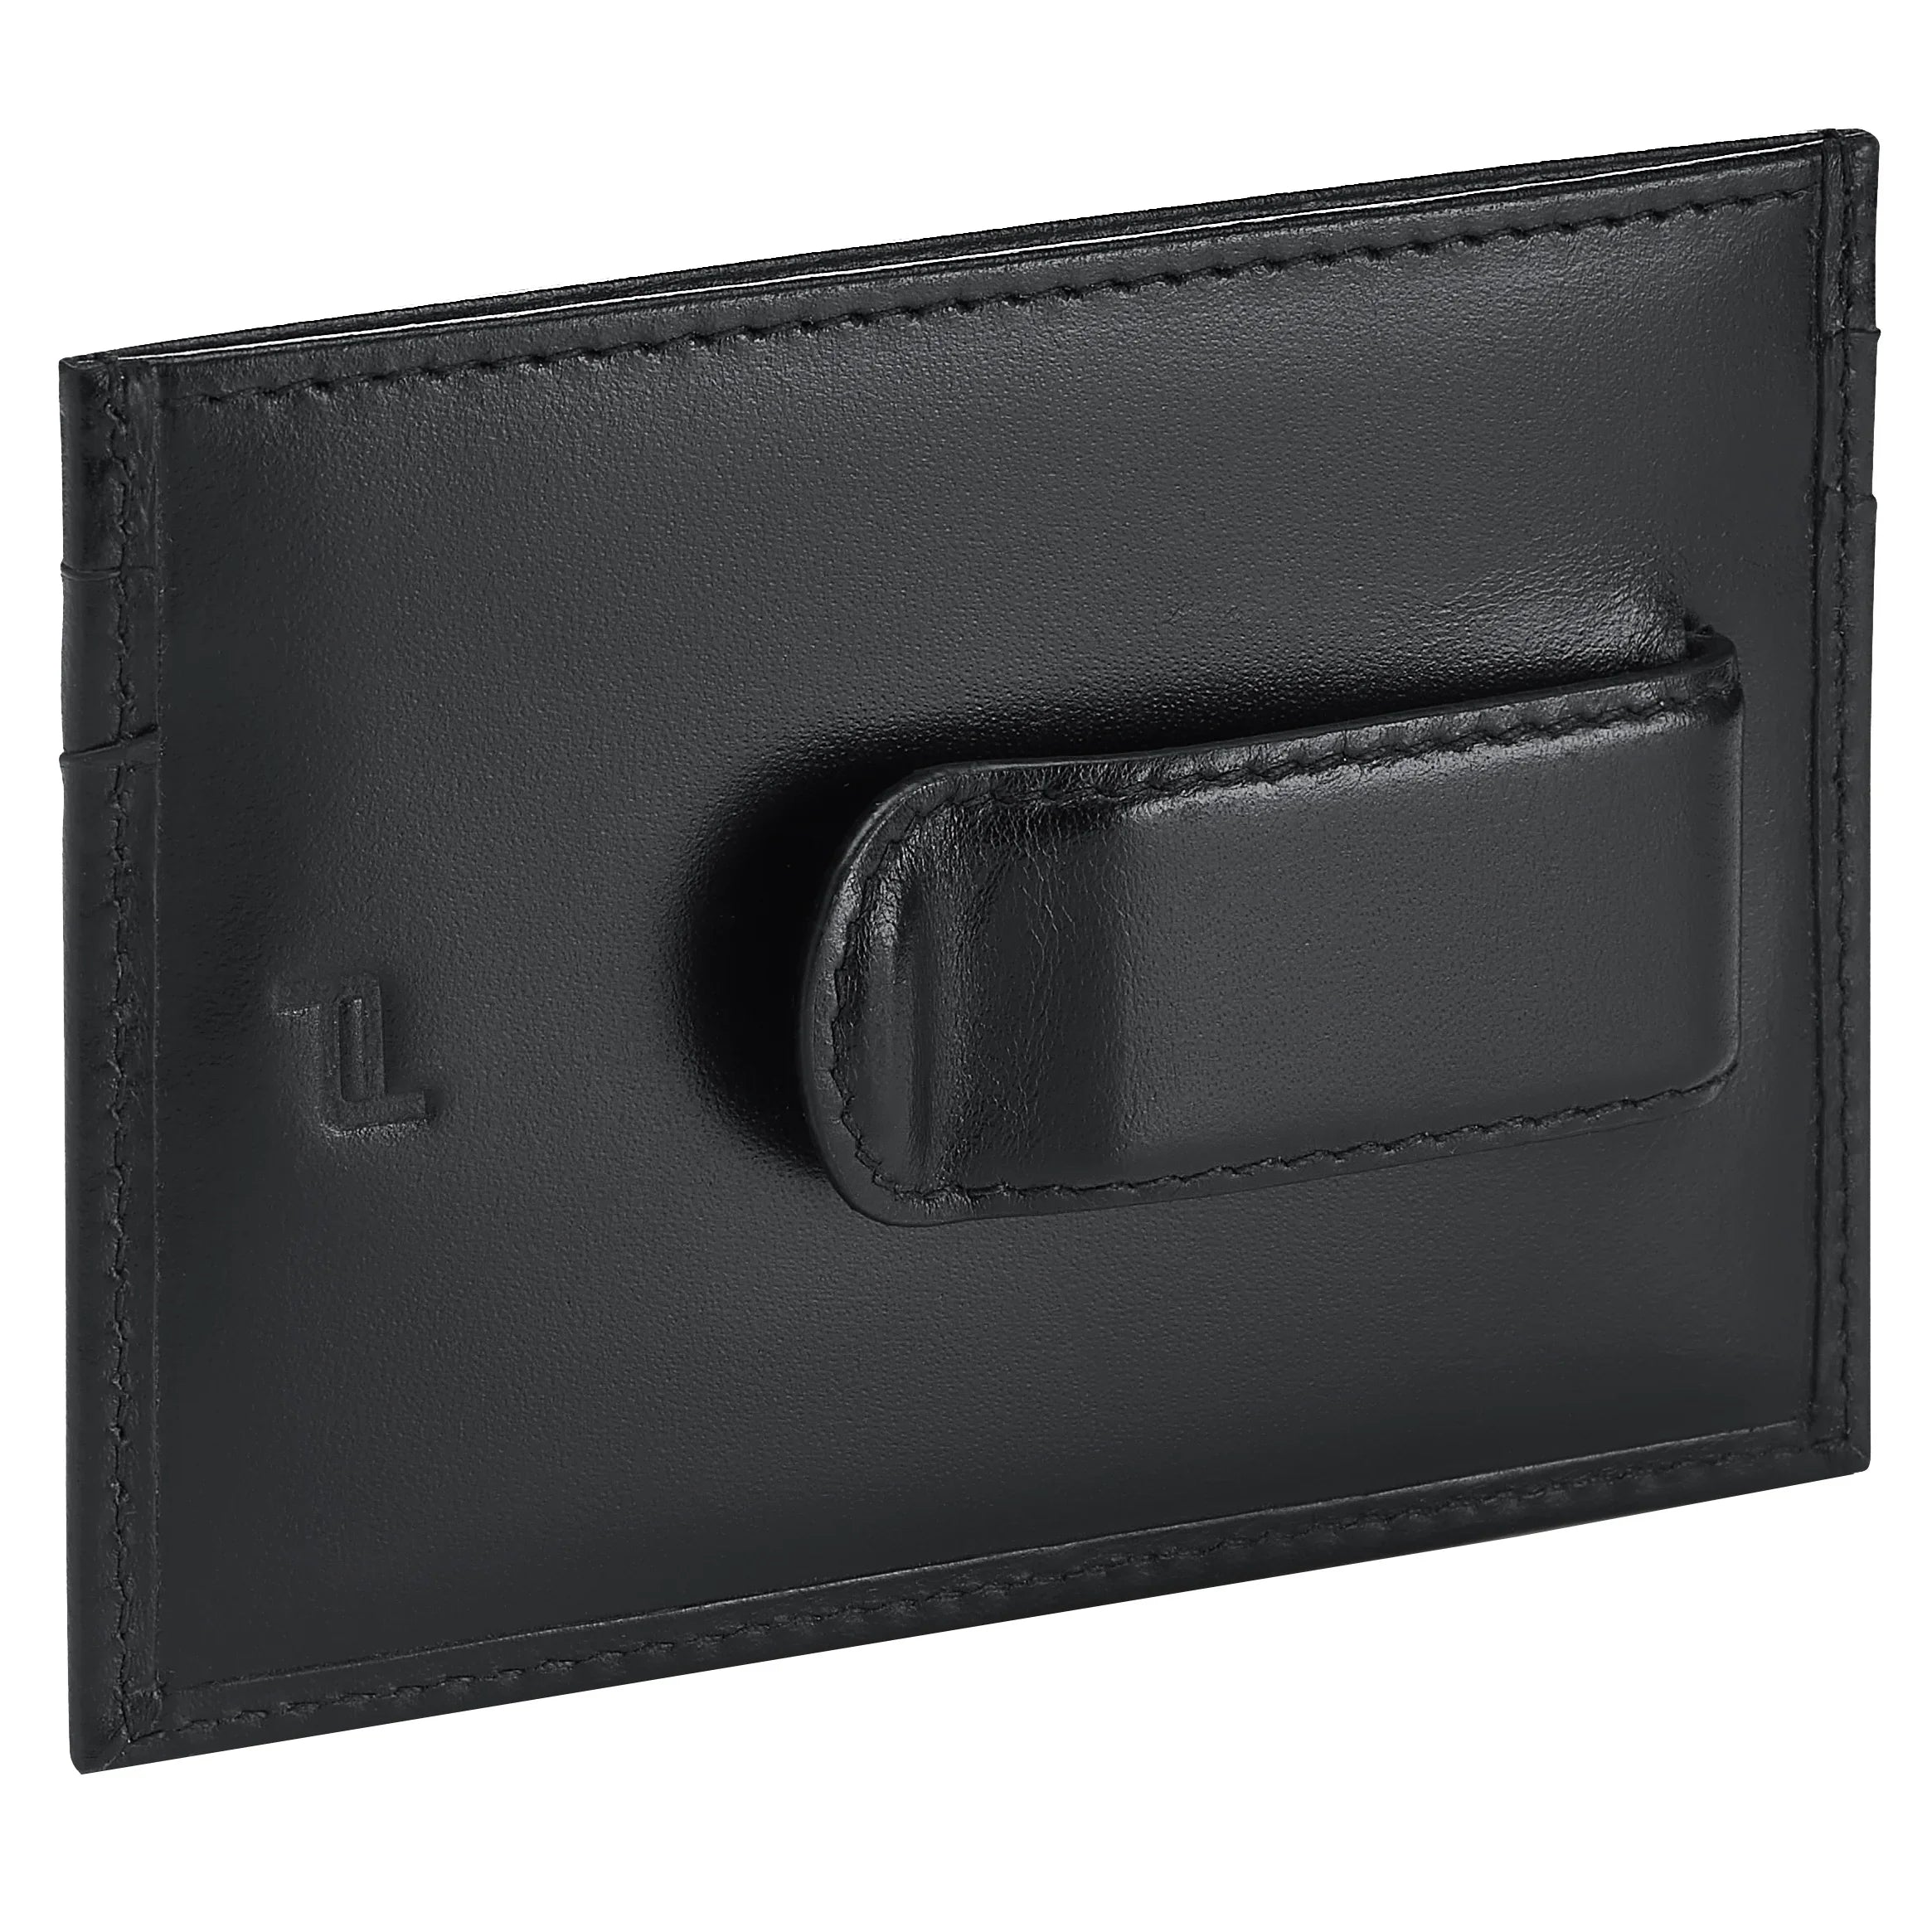 Porsche Design Accessories Classic Cardholder 2 Money Clip RFID 10 cm - Black